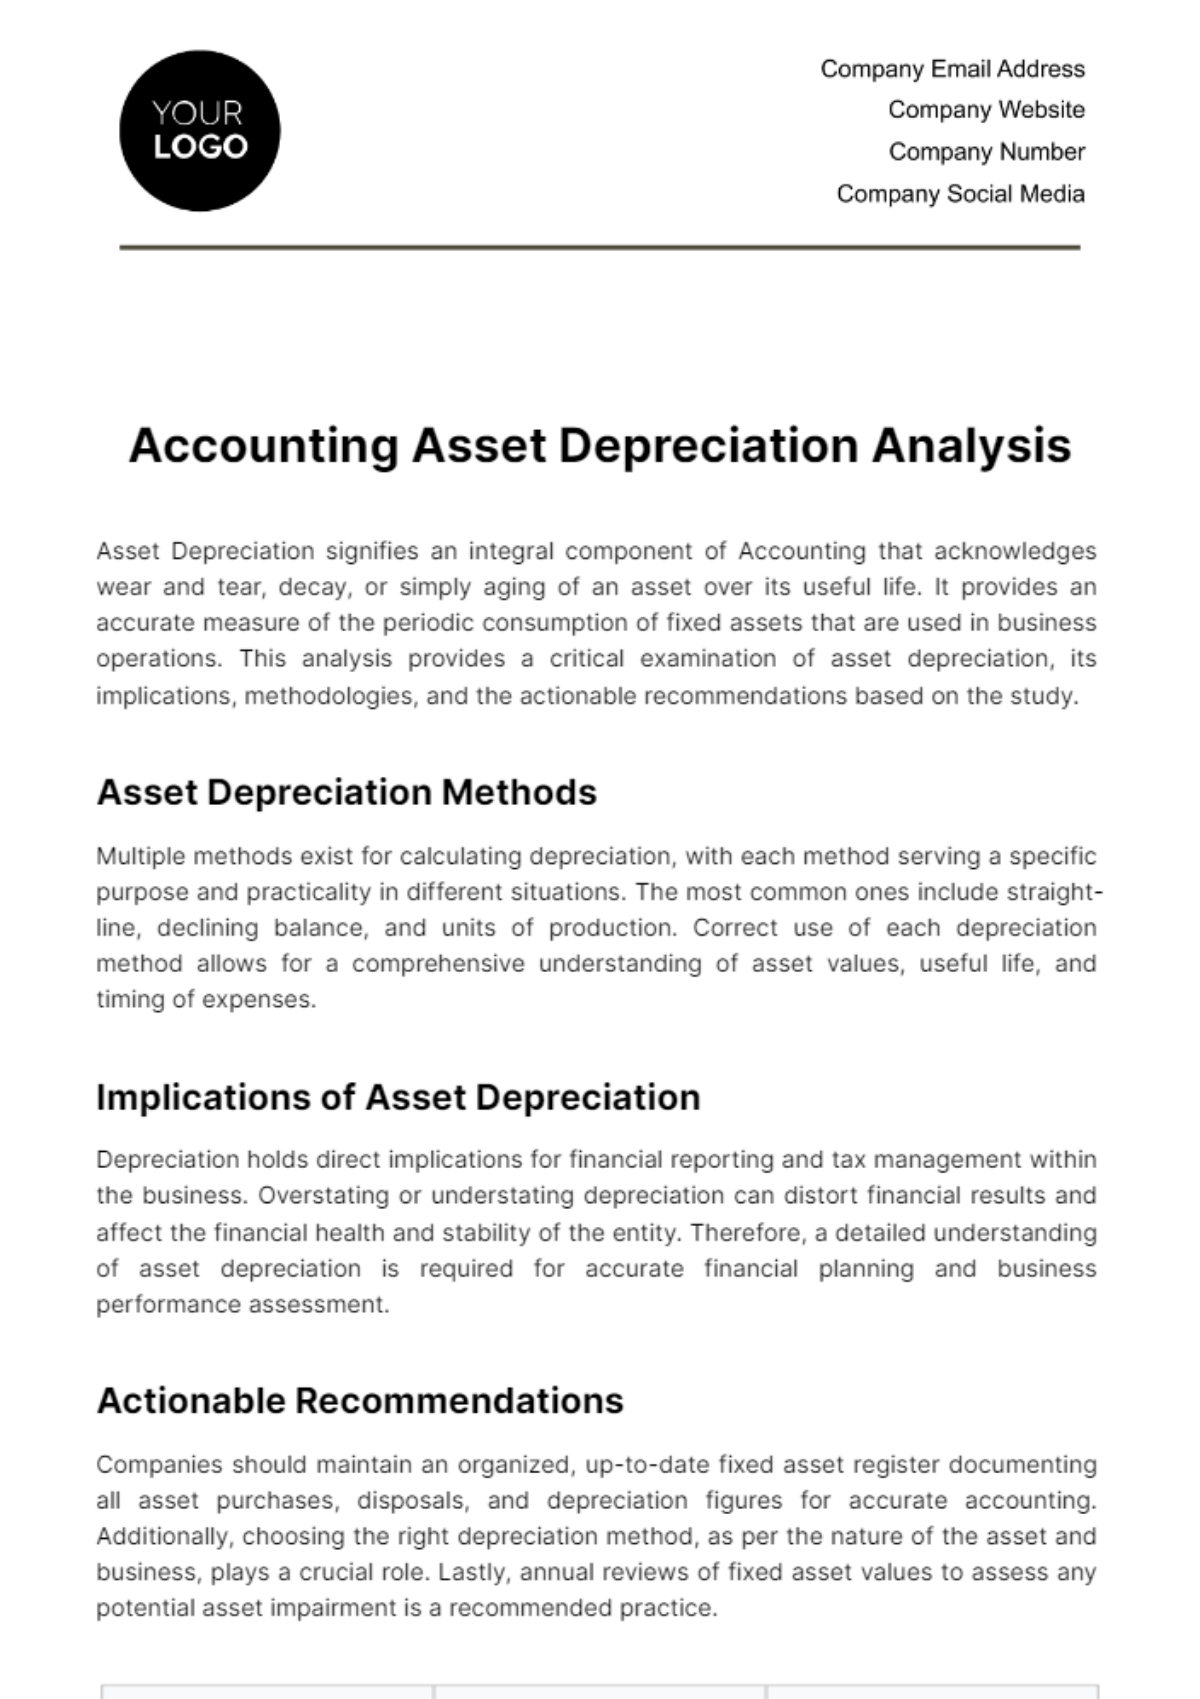 Accounting Asset Depreciation Analysis Template